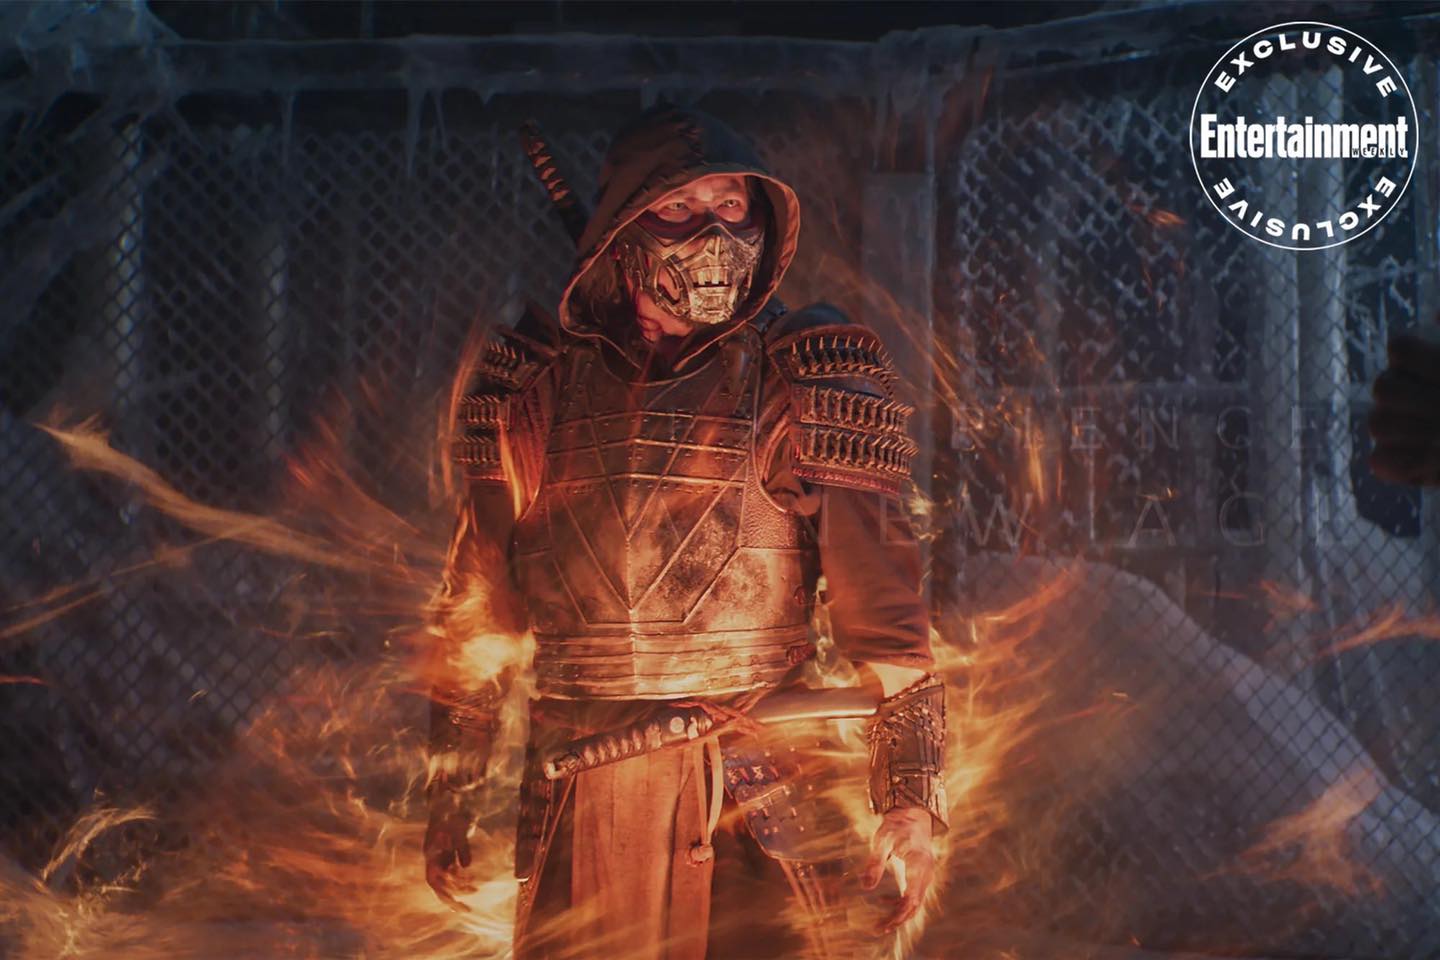 Filme de Mortal Kombat tem grandes planos para Jax